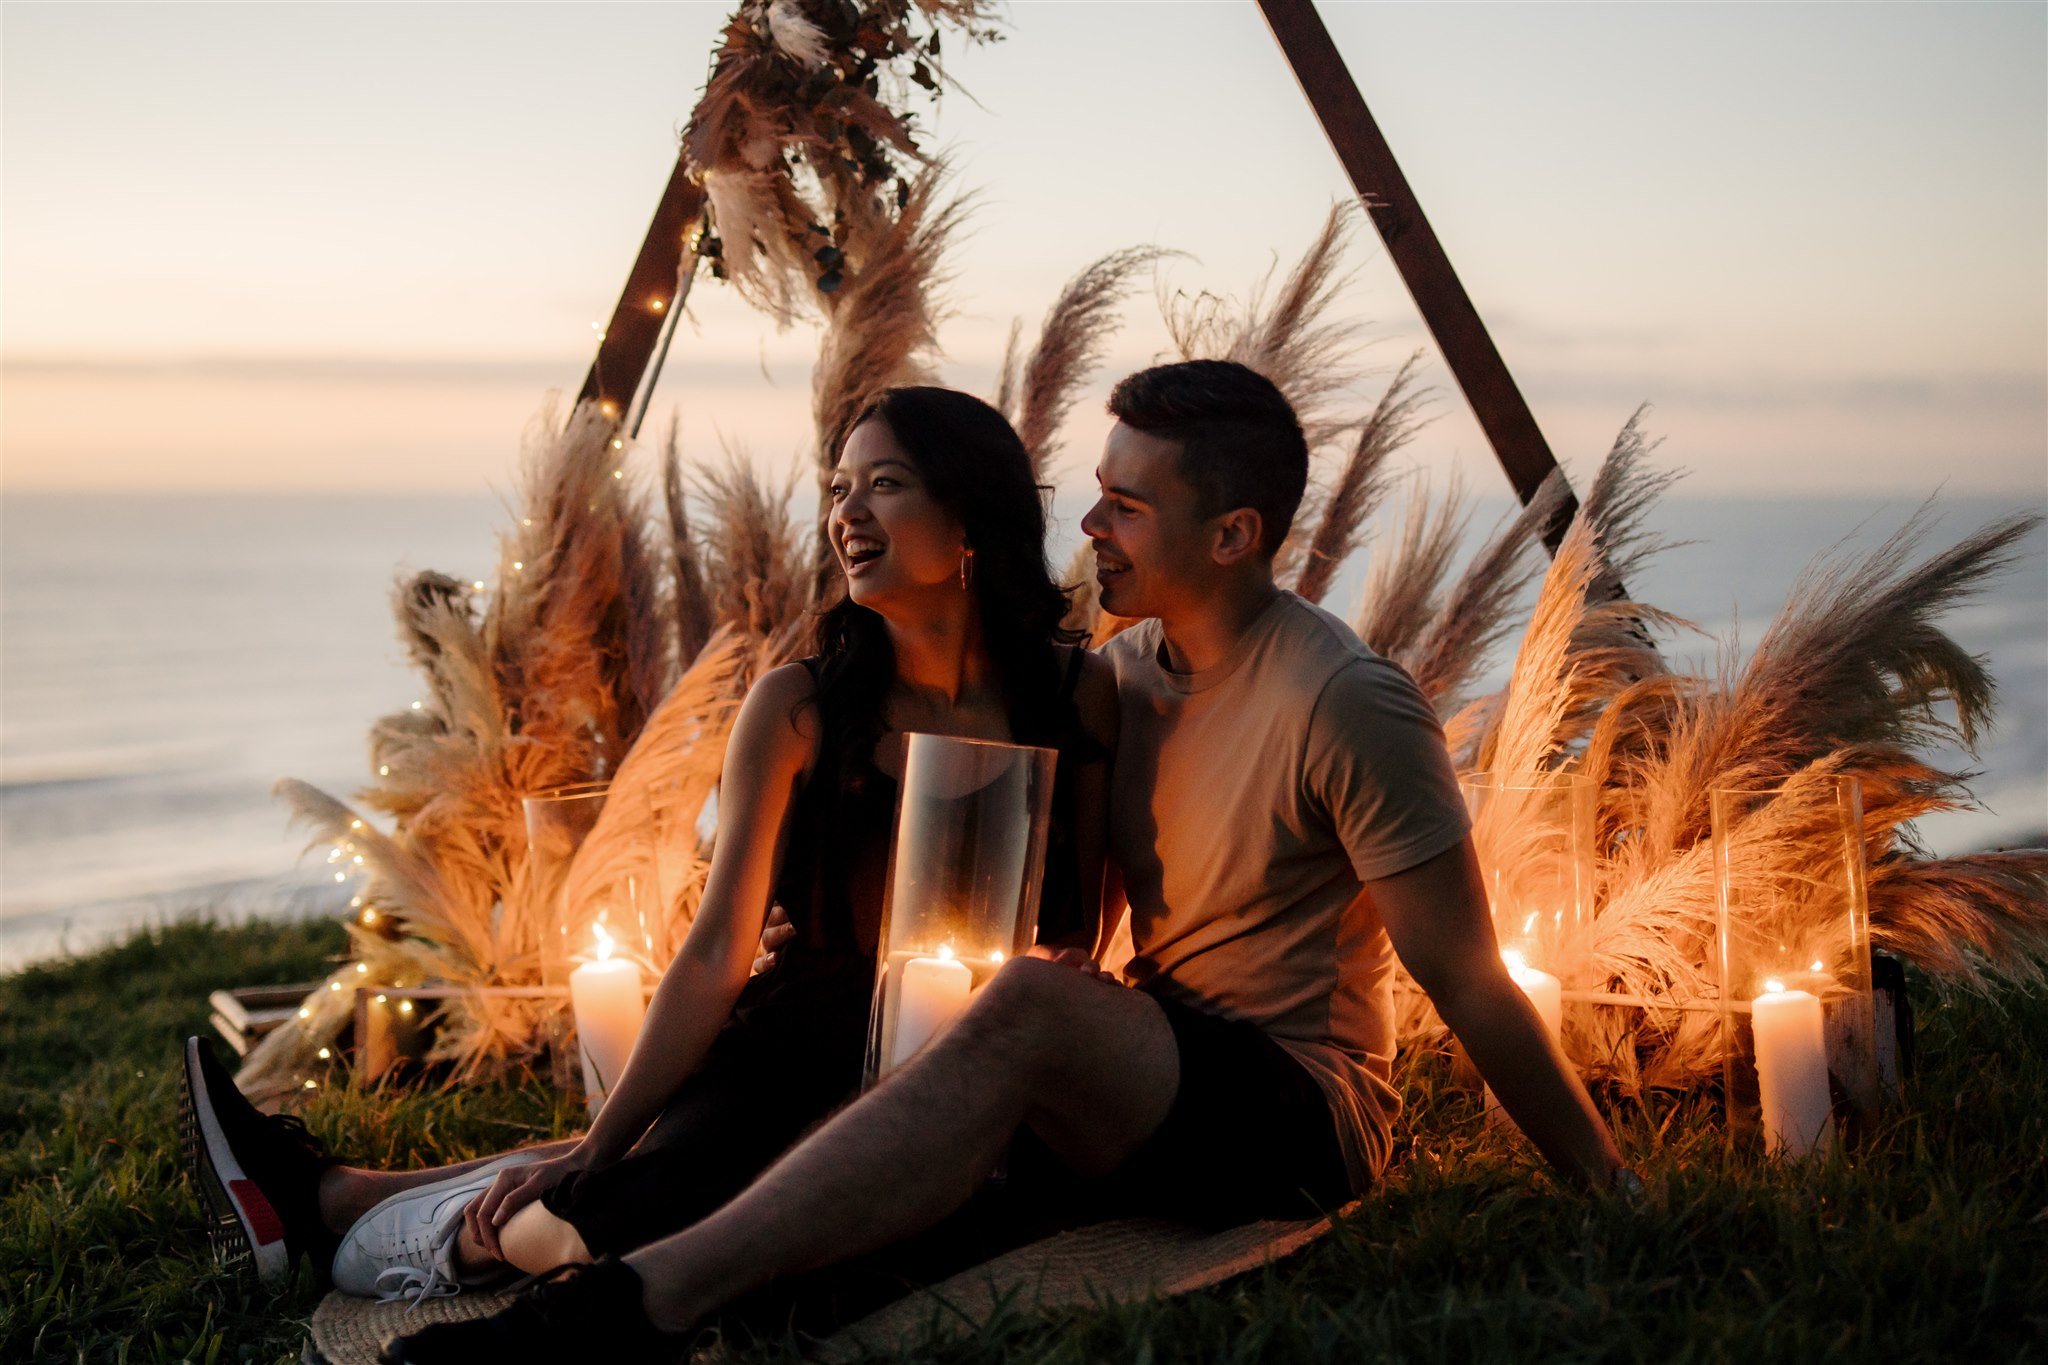 castaways-NZ-new-zealand-auckland-wedding-photographer-photography-videography-film-dear-white-productions-best-venue-waiuku-engagement-elopement-style-beach-intimate (424).jpg